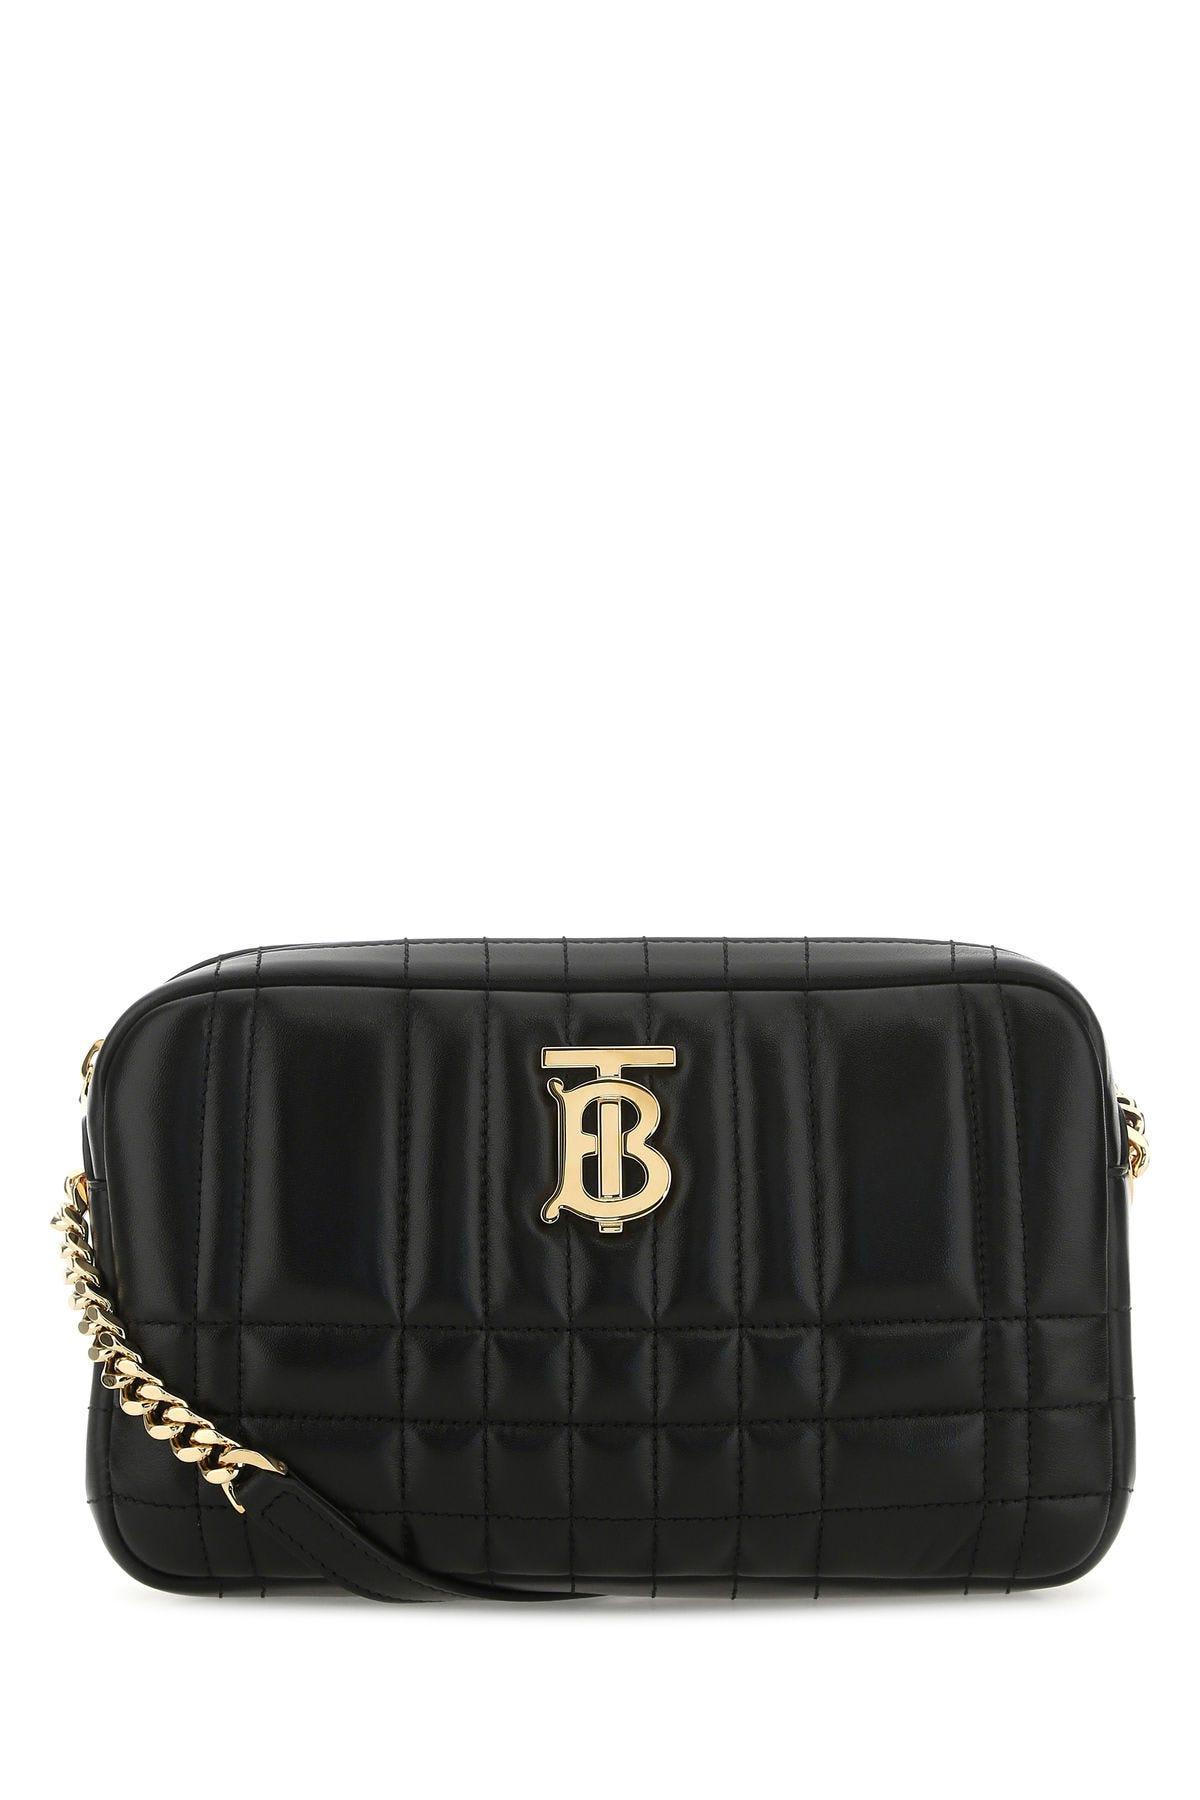 Burberry Black Nappa Leather Small Lola Crossbody Bag